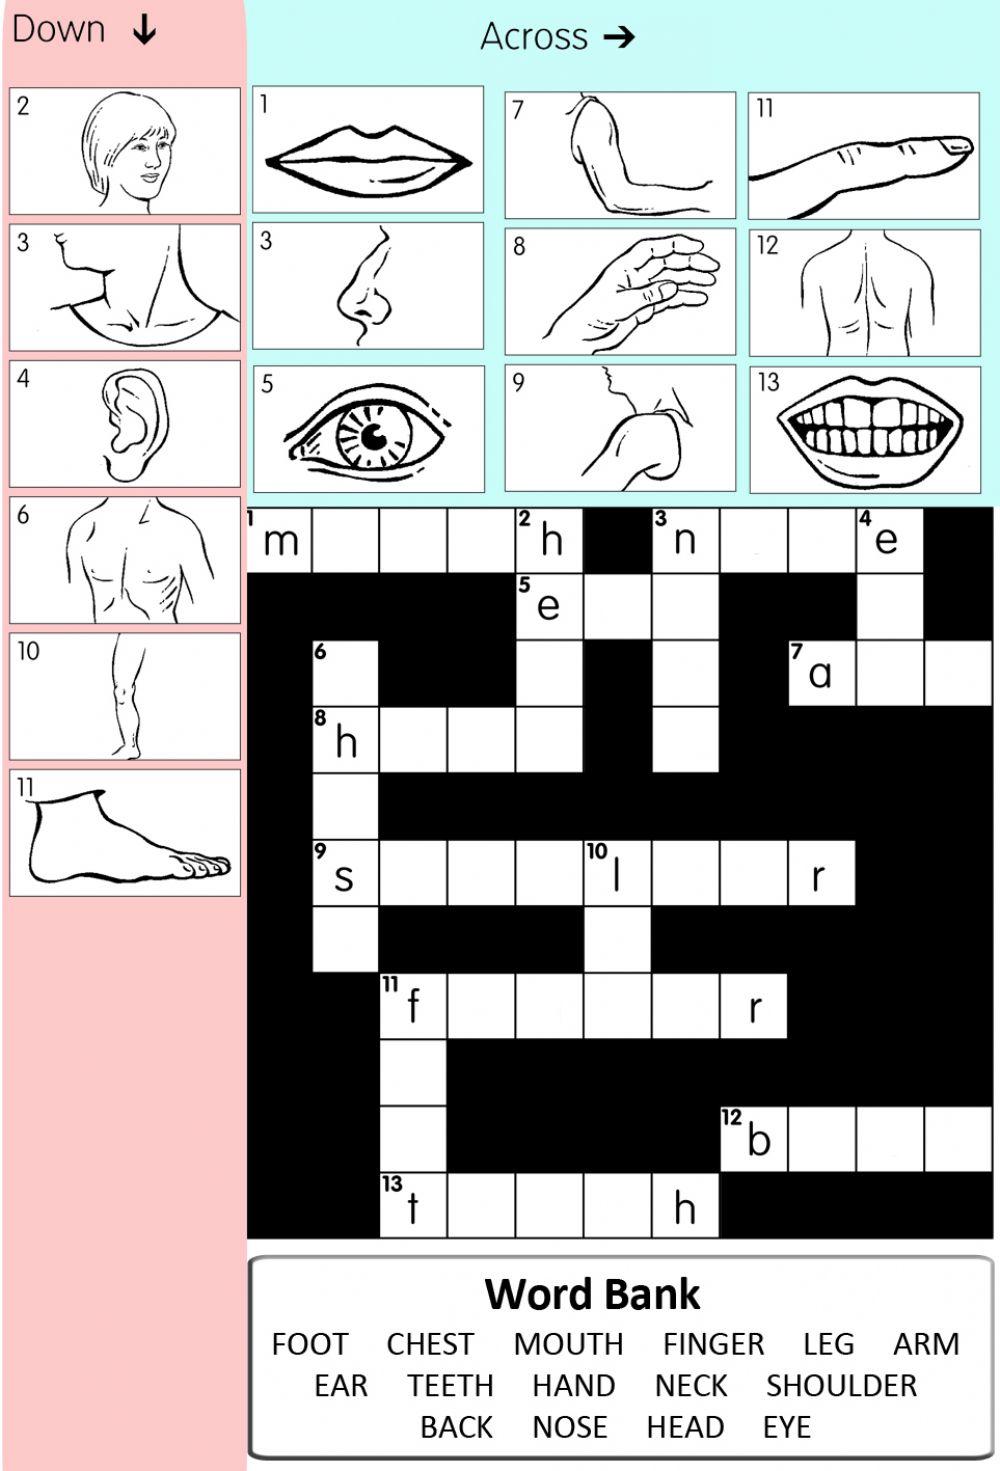 Parts of the Body Crossword